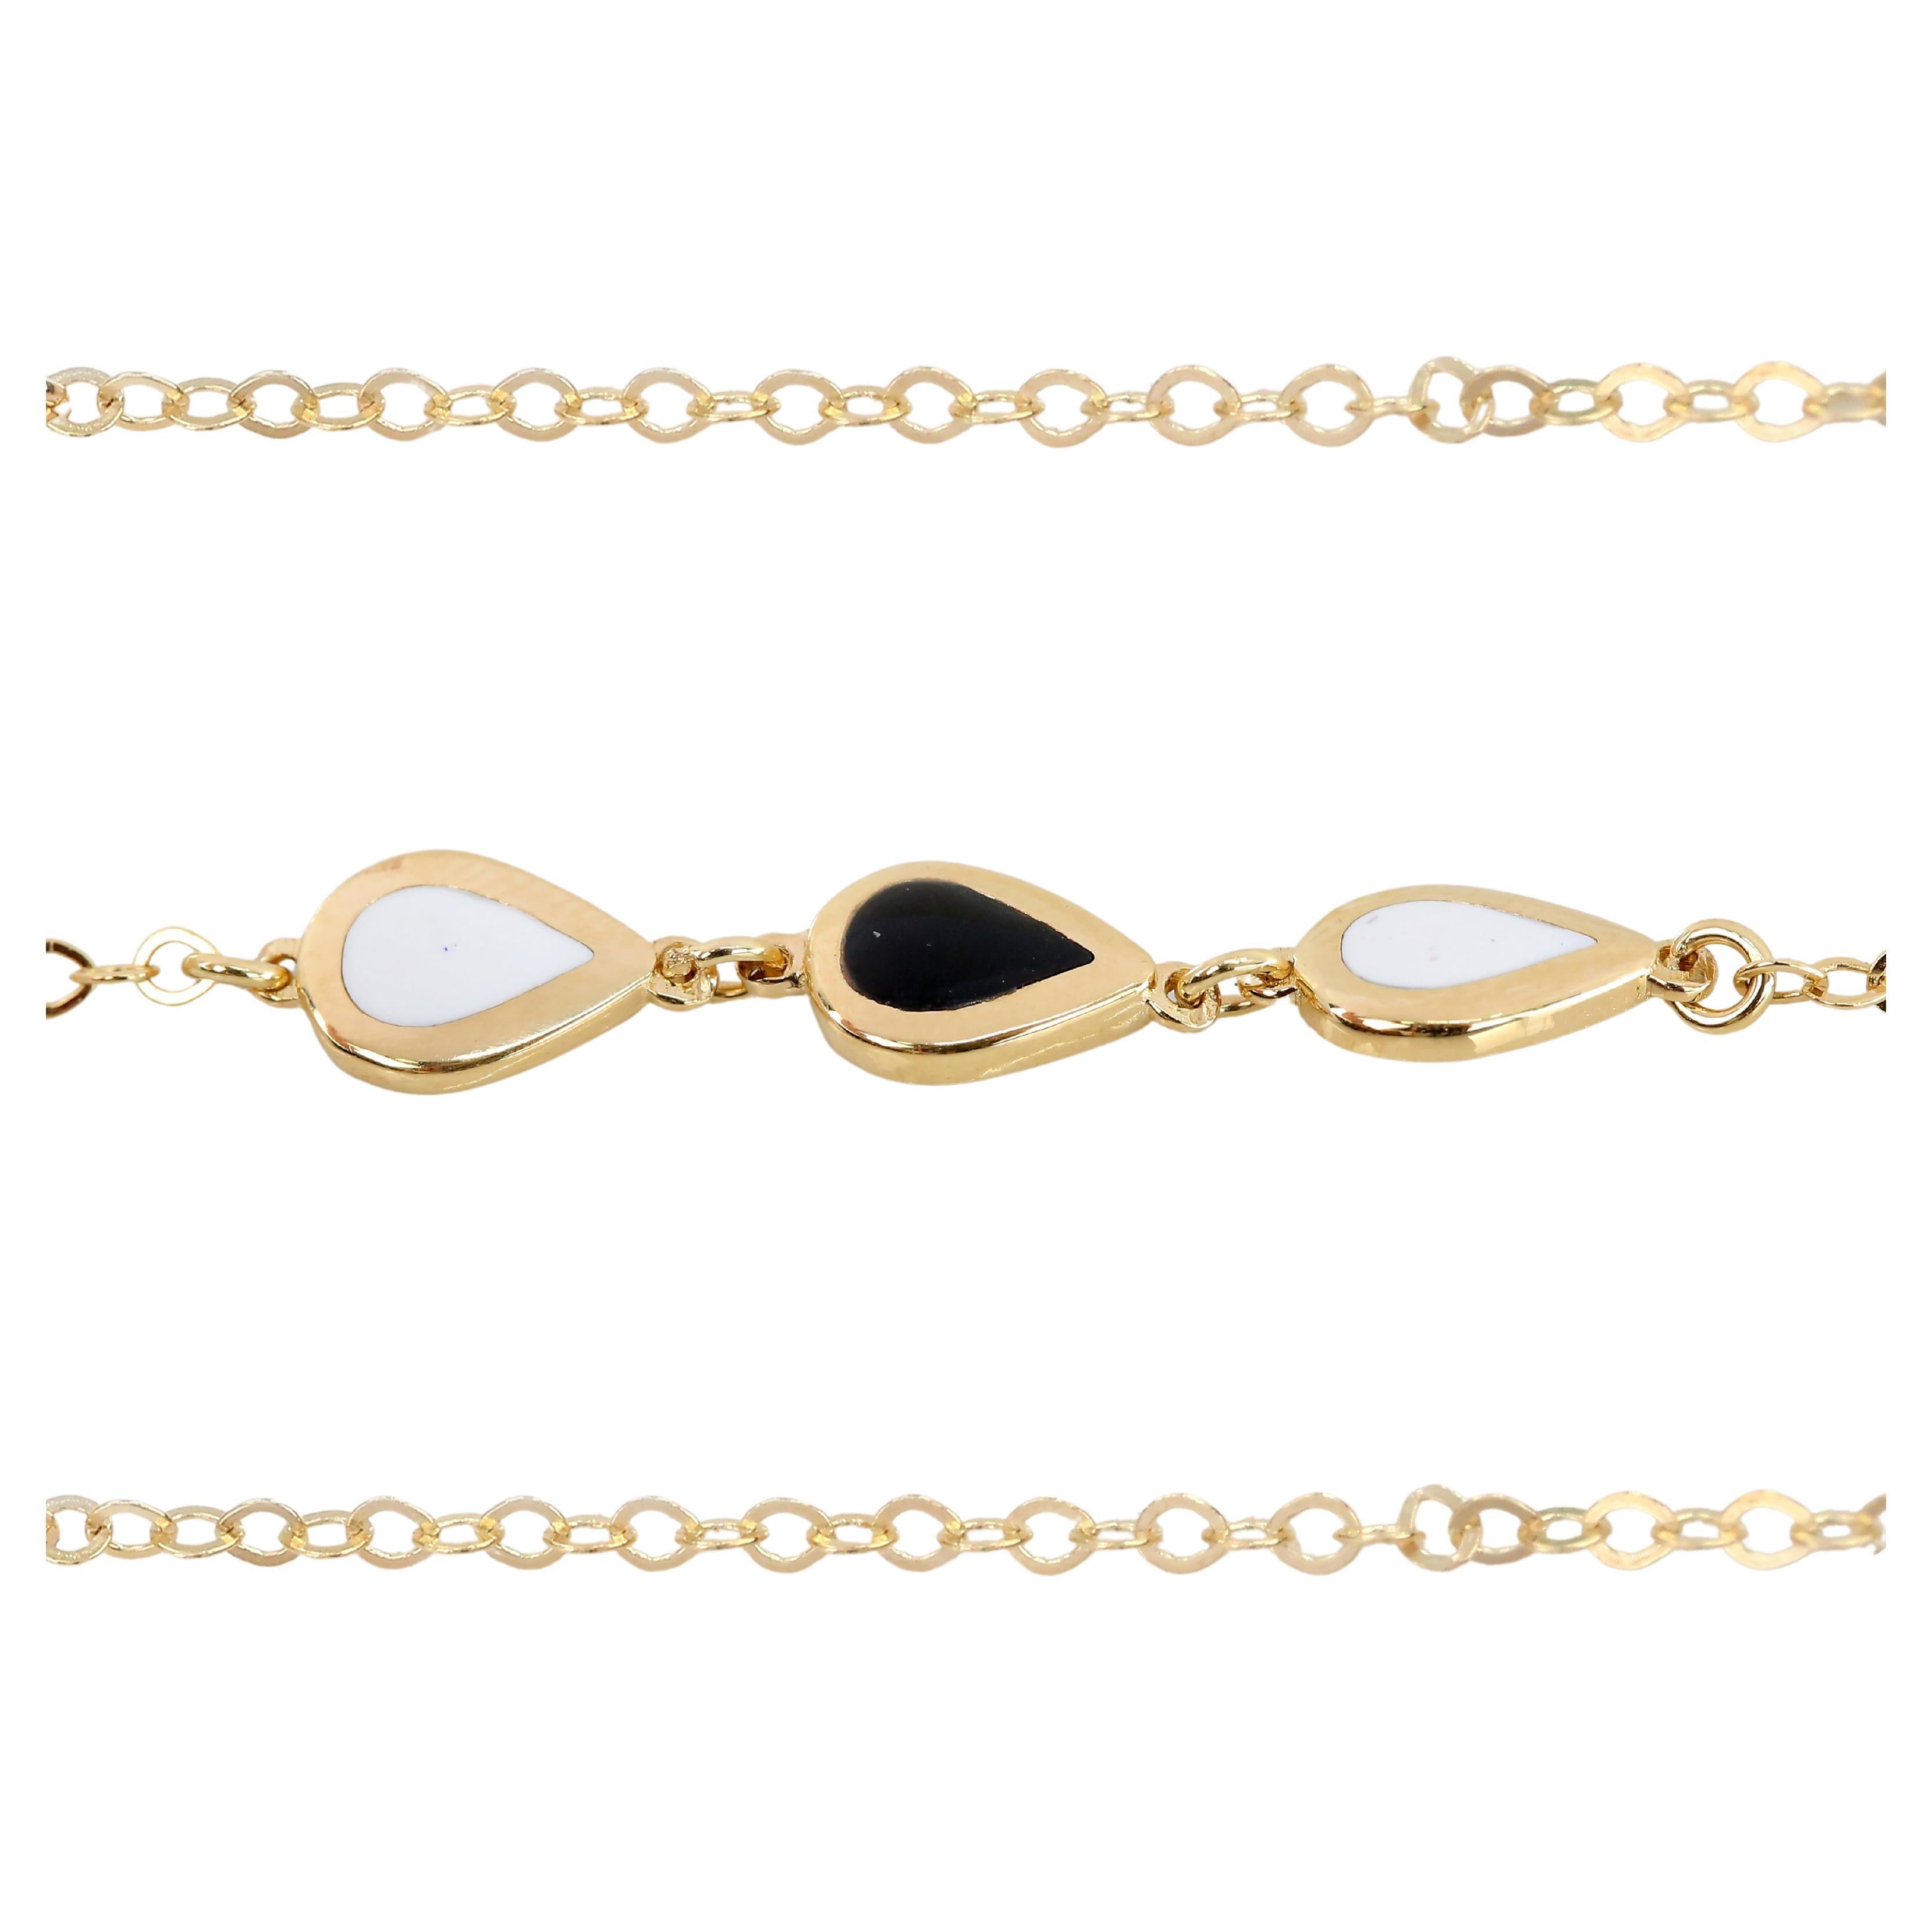 14K Gold Black and White Enameled Pear Shaped Charm Dainty Bracelet